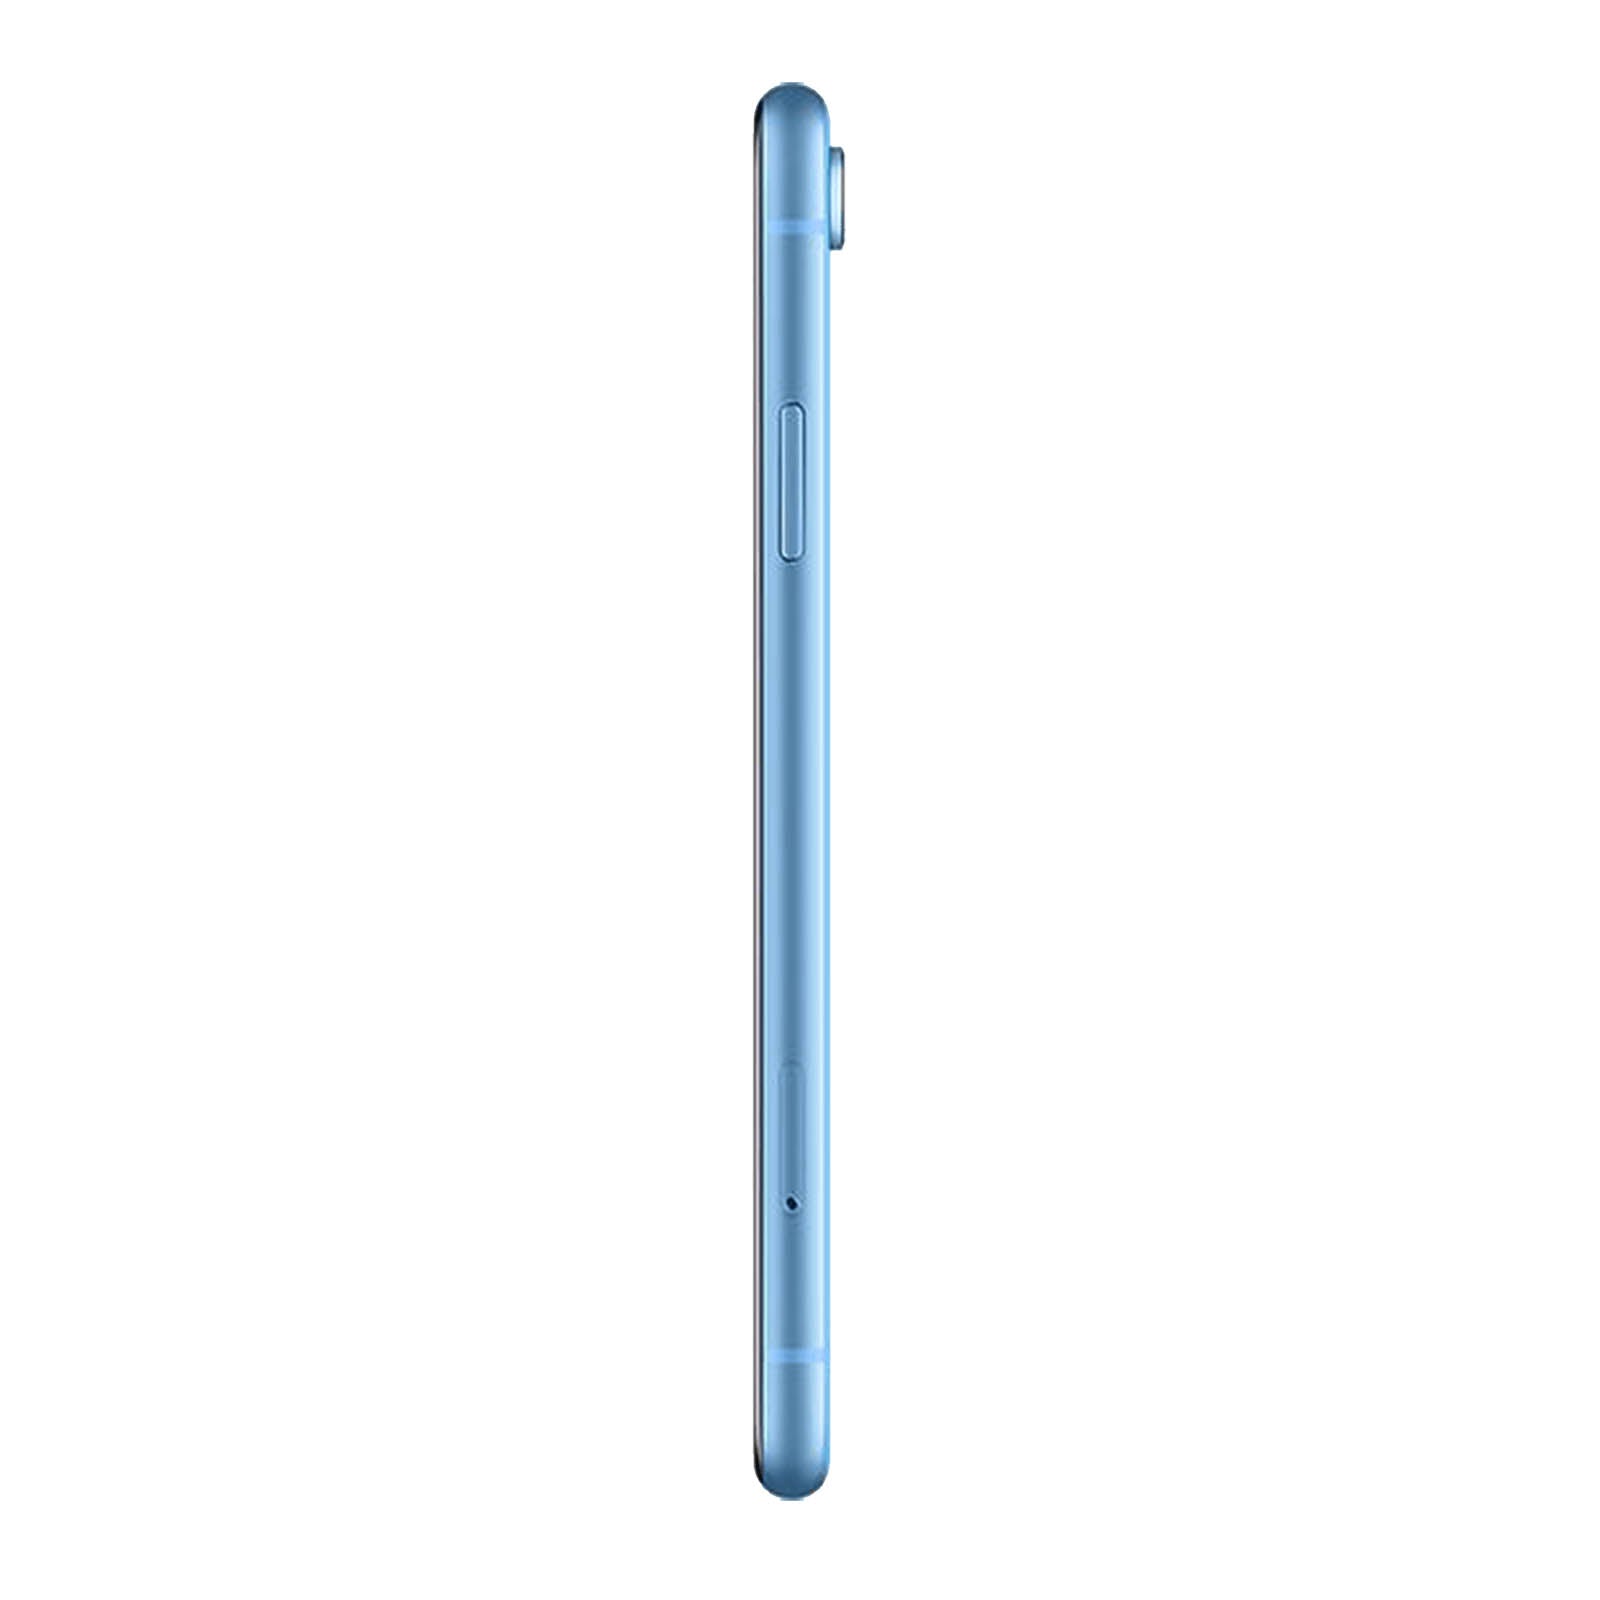 Apple iPhone XR 64GB Blue Very Good - Verizon